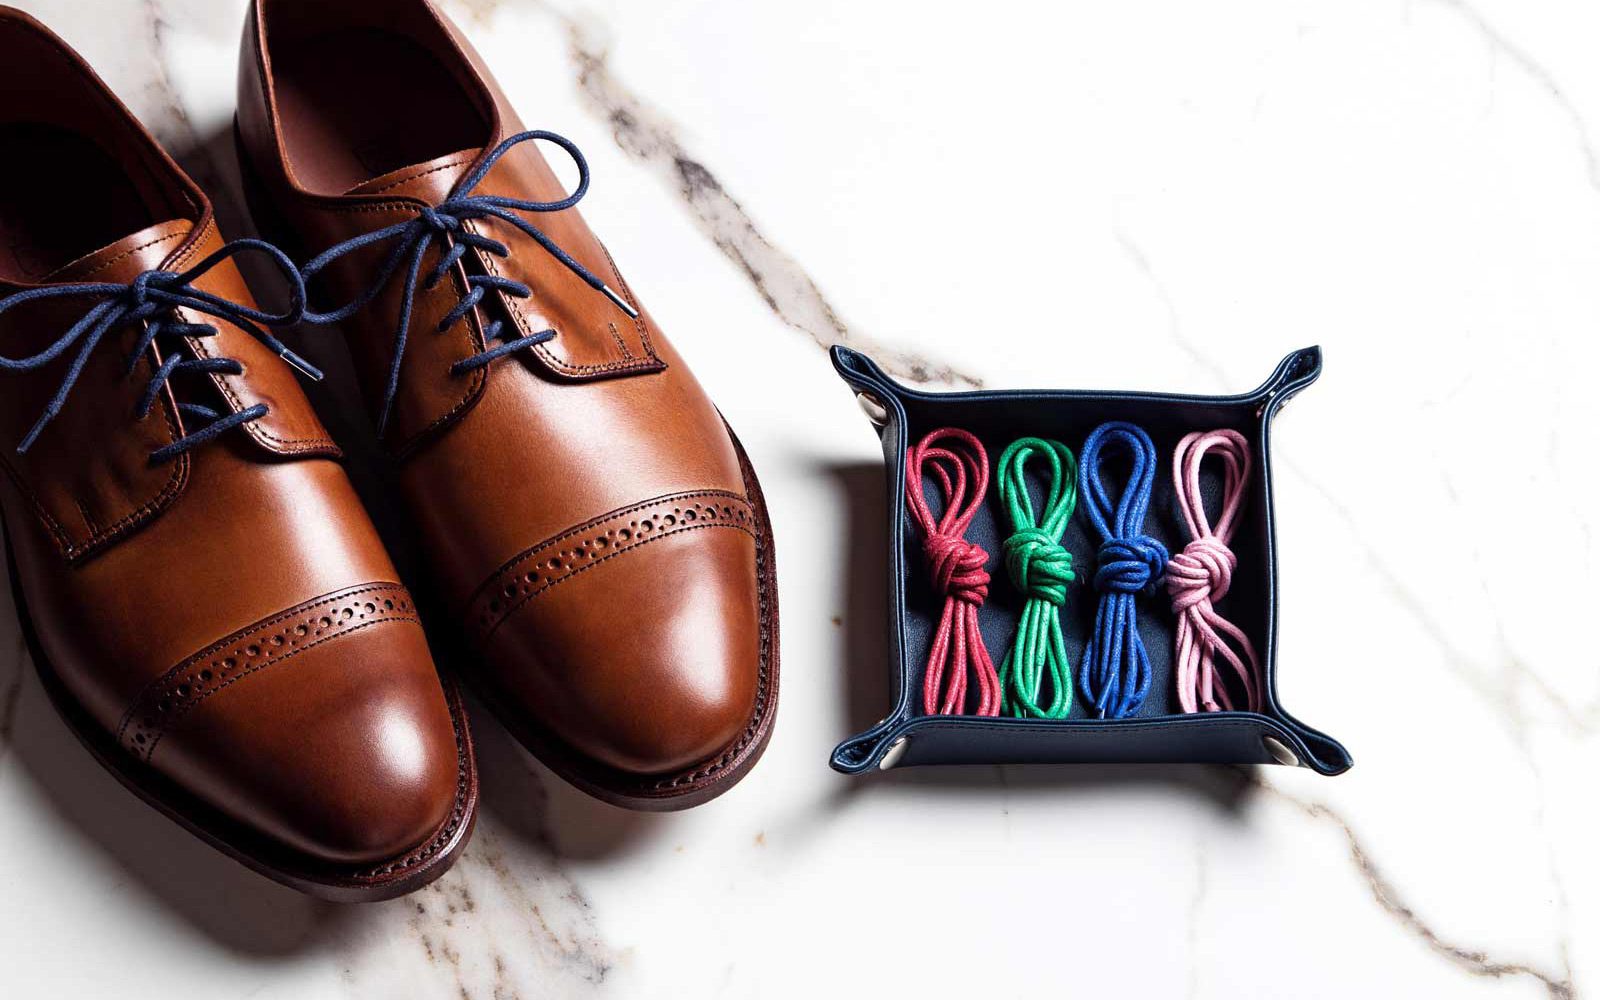 Dress shoes next to colorful laces